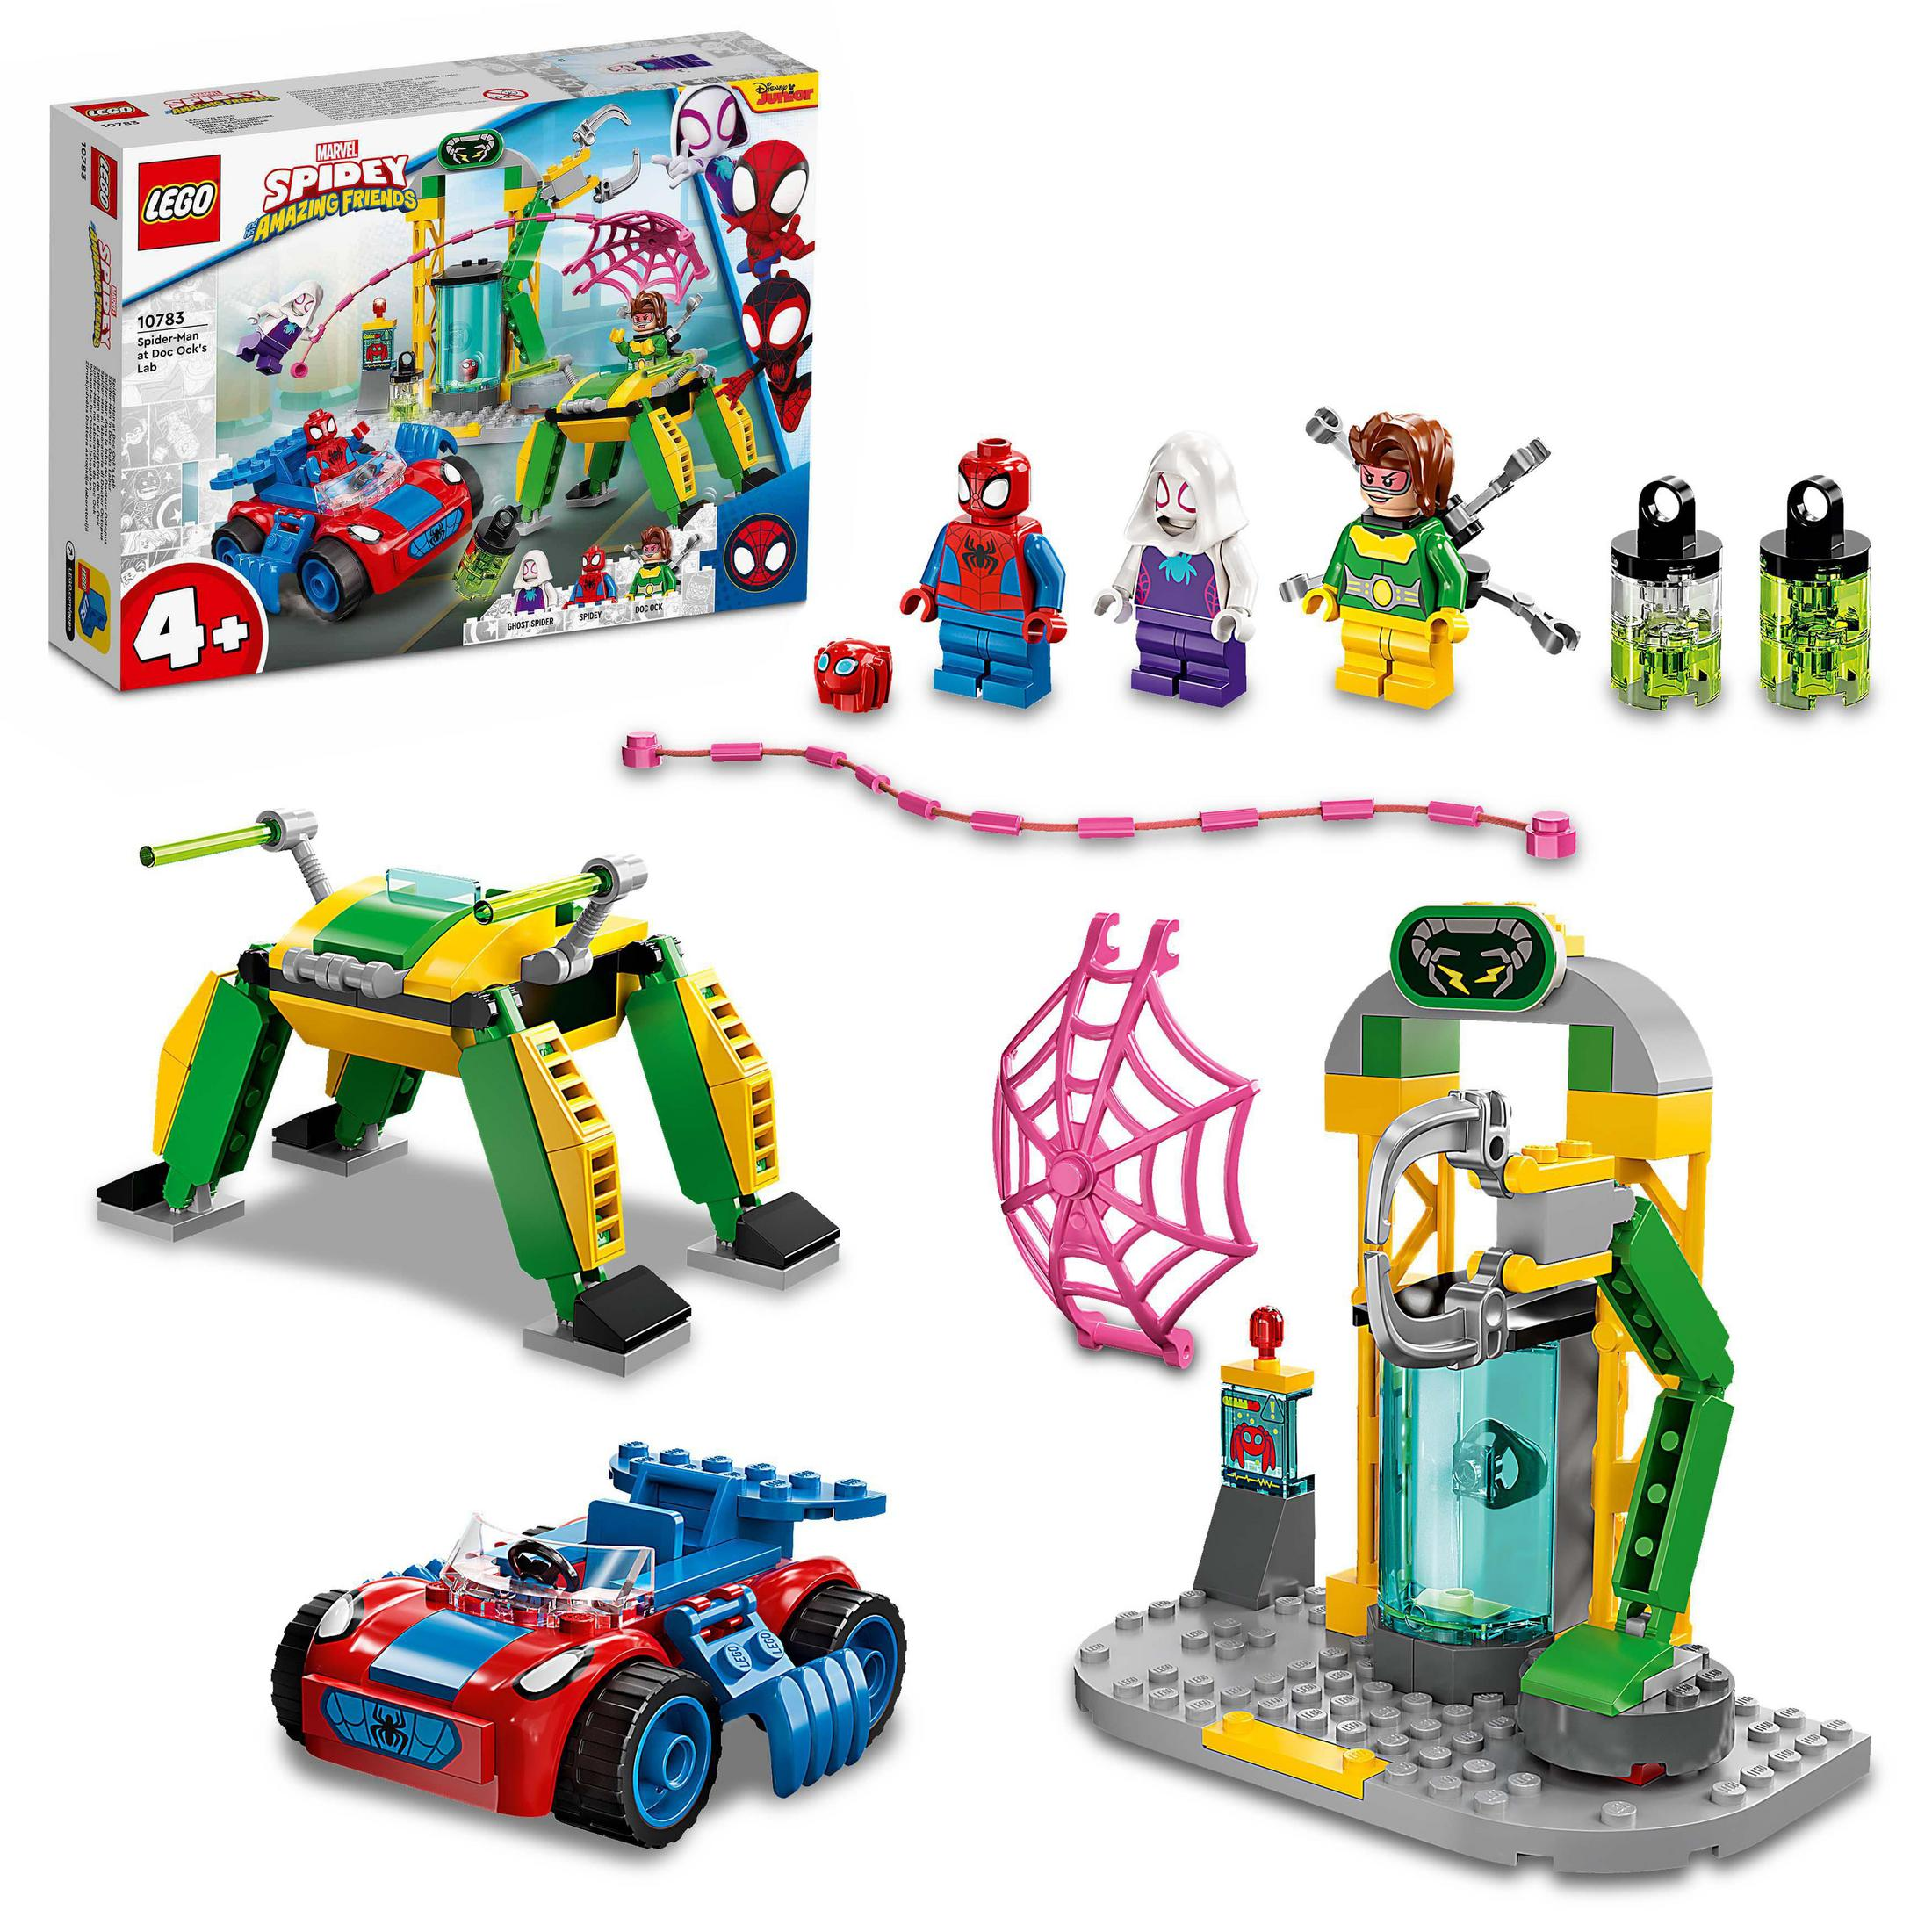 SPIDER-MAN Mehrfarbig LEGO IN 10783 DOC LABOR Bausatz, OCKS